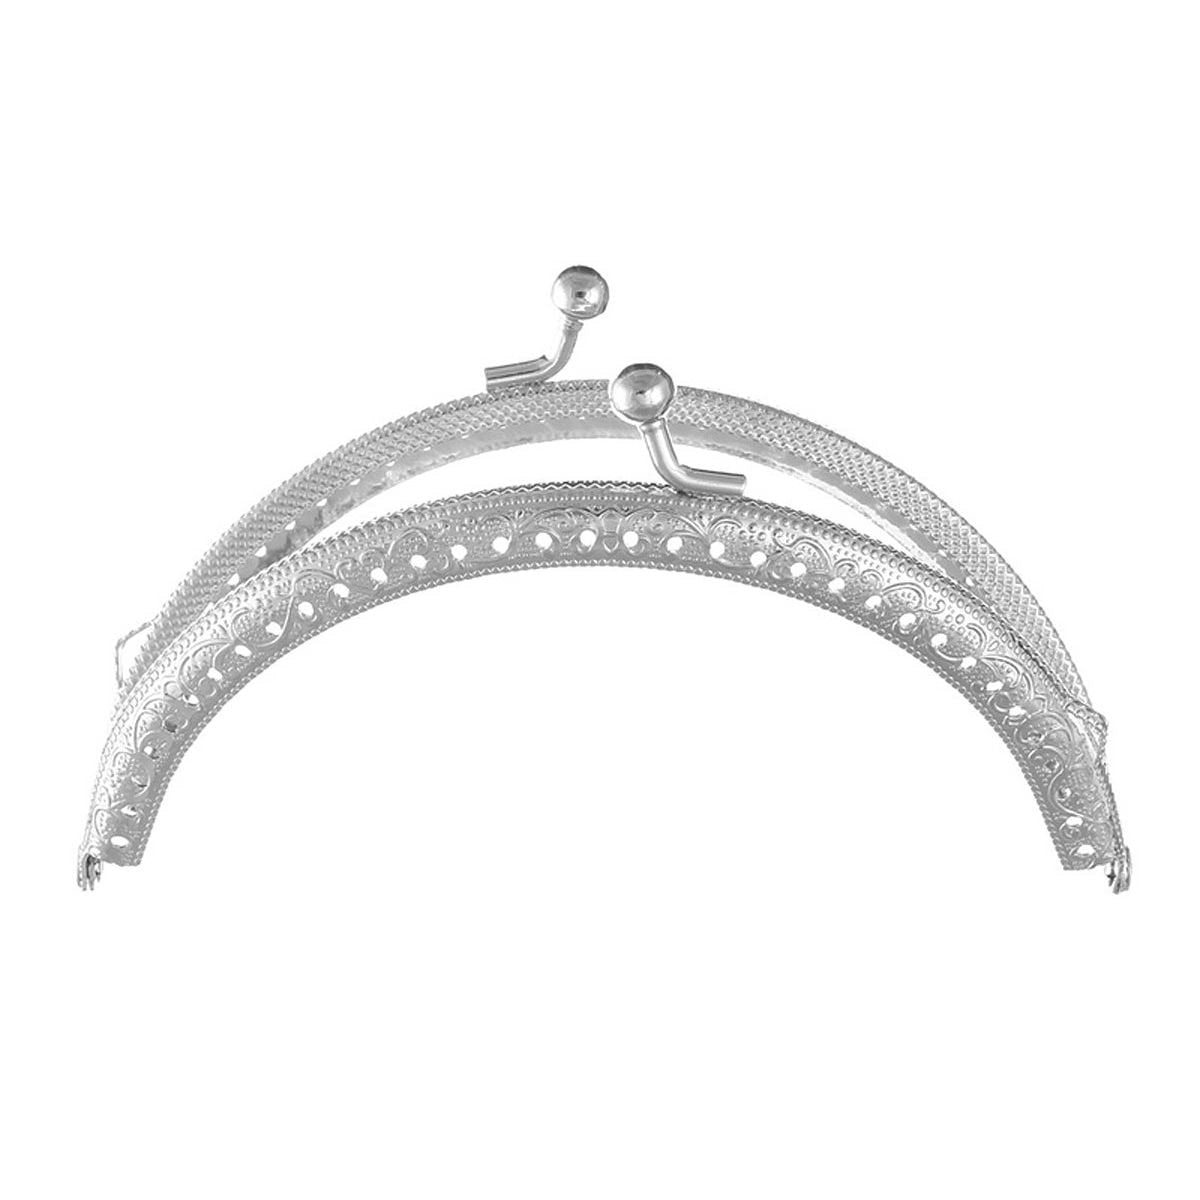 Metal Frame Kiss Clasp Lock Arch For Purse Bag Silver Tone 1pc Approx: 12.6cm x7.7cm(5inch x3inch) - ebowsos